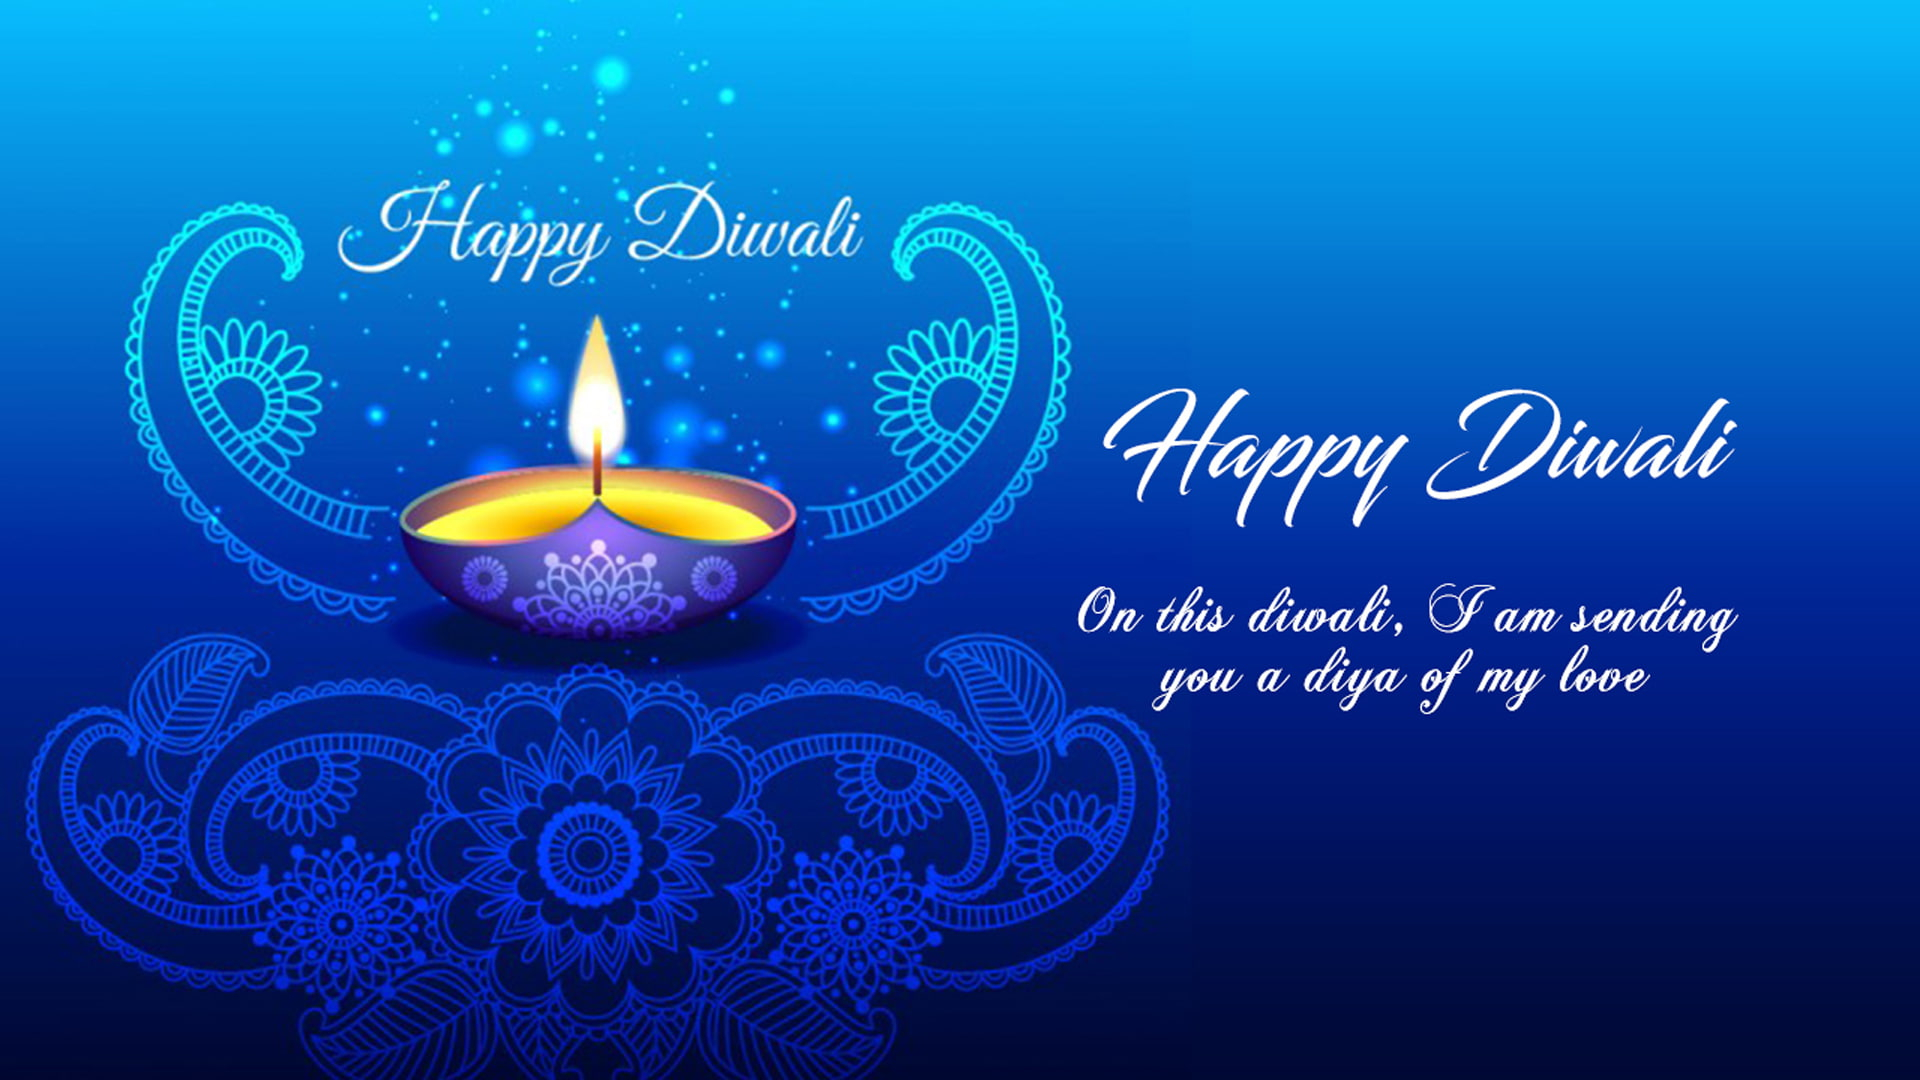 Happy Diwali Images 2020